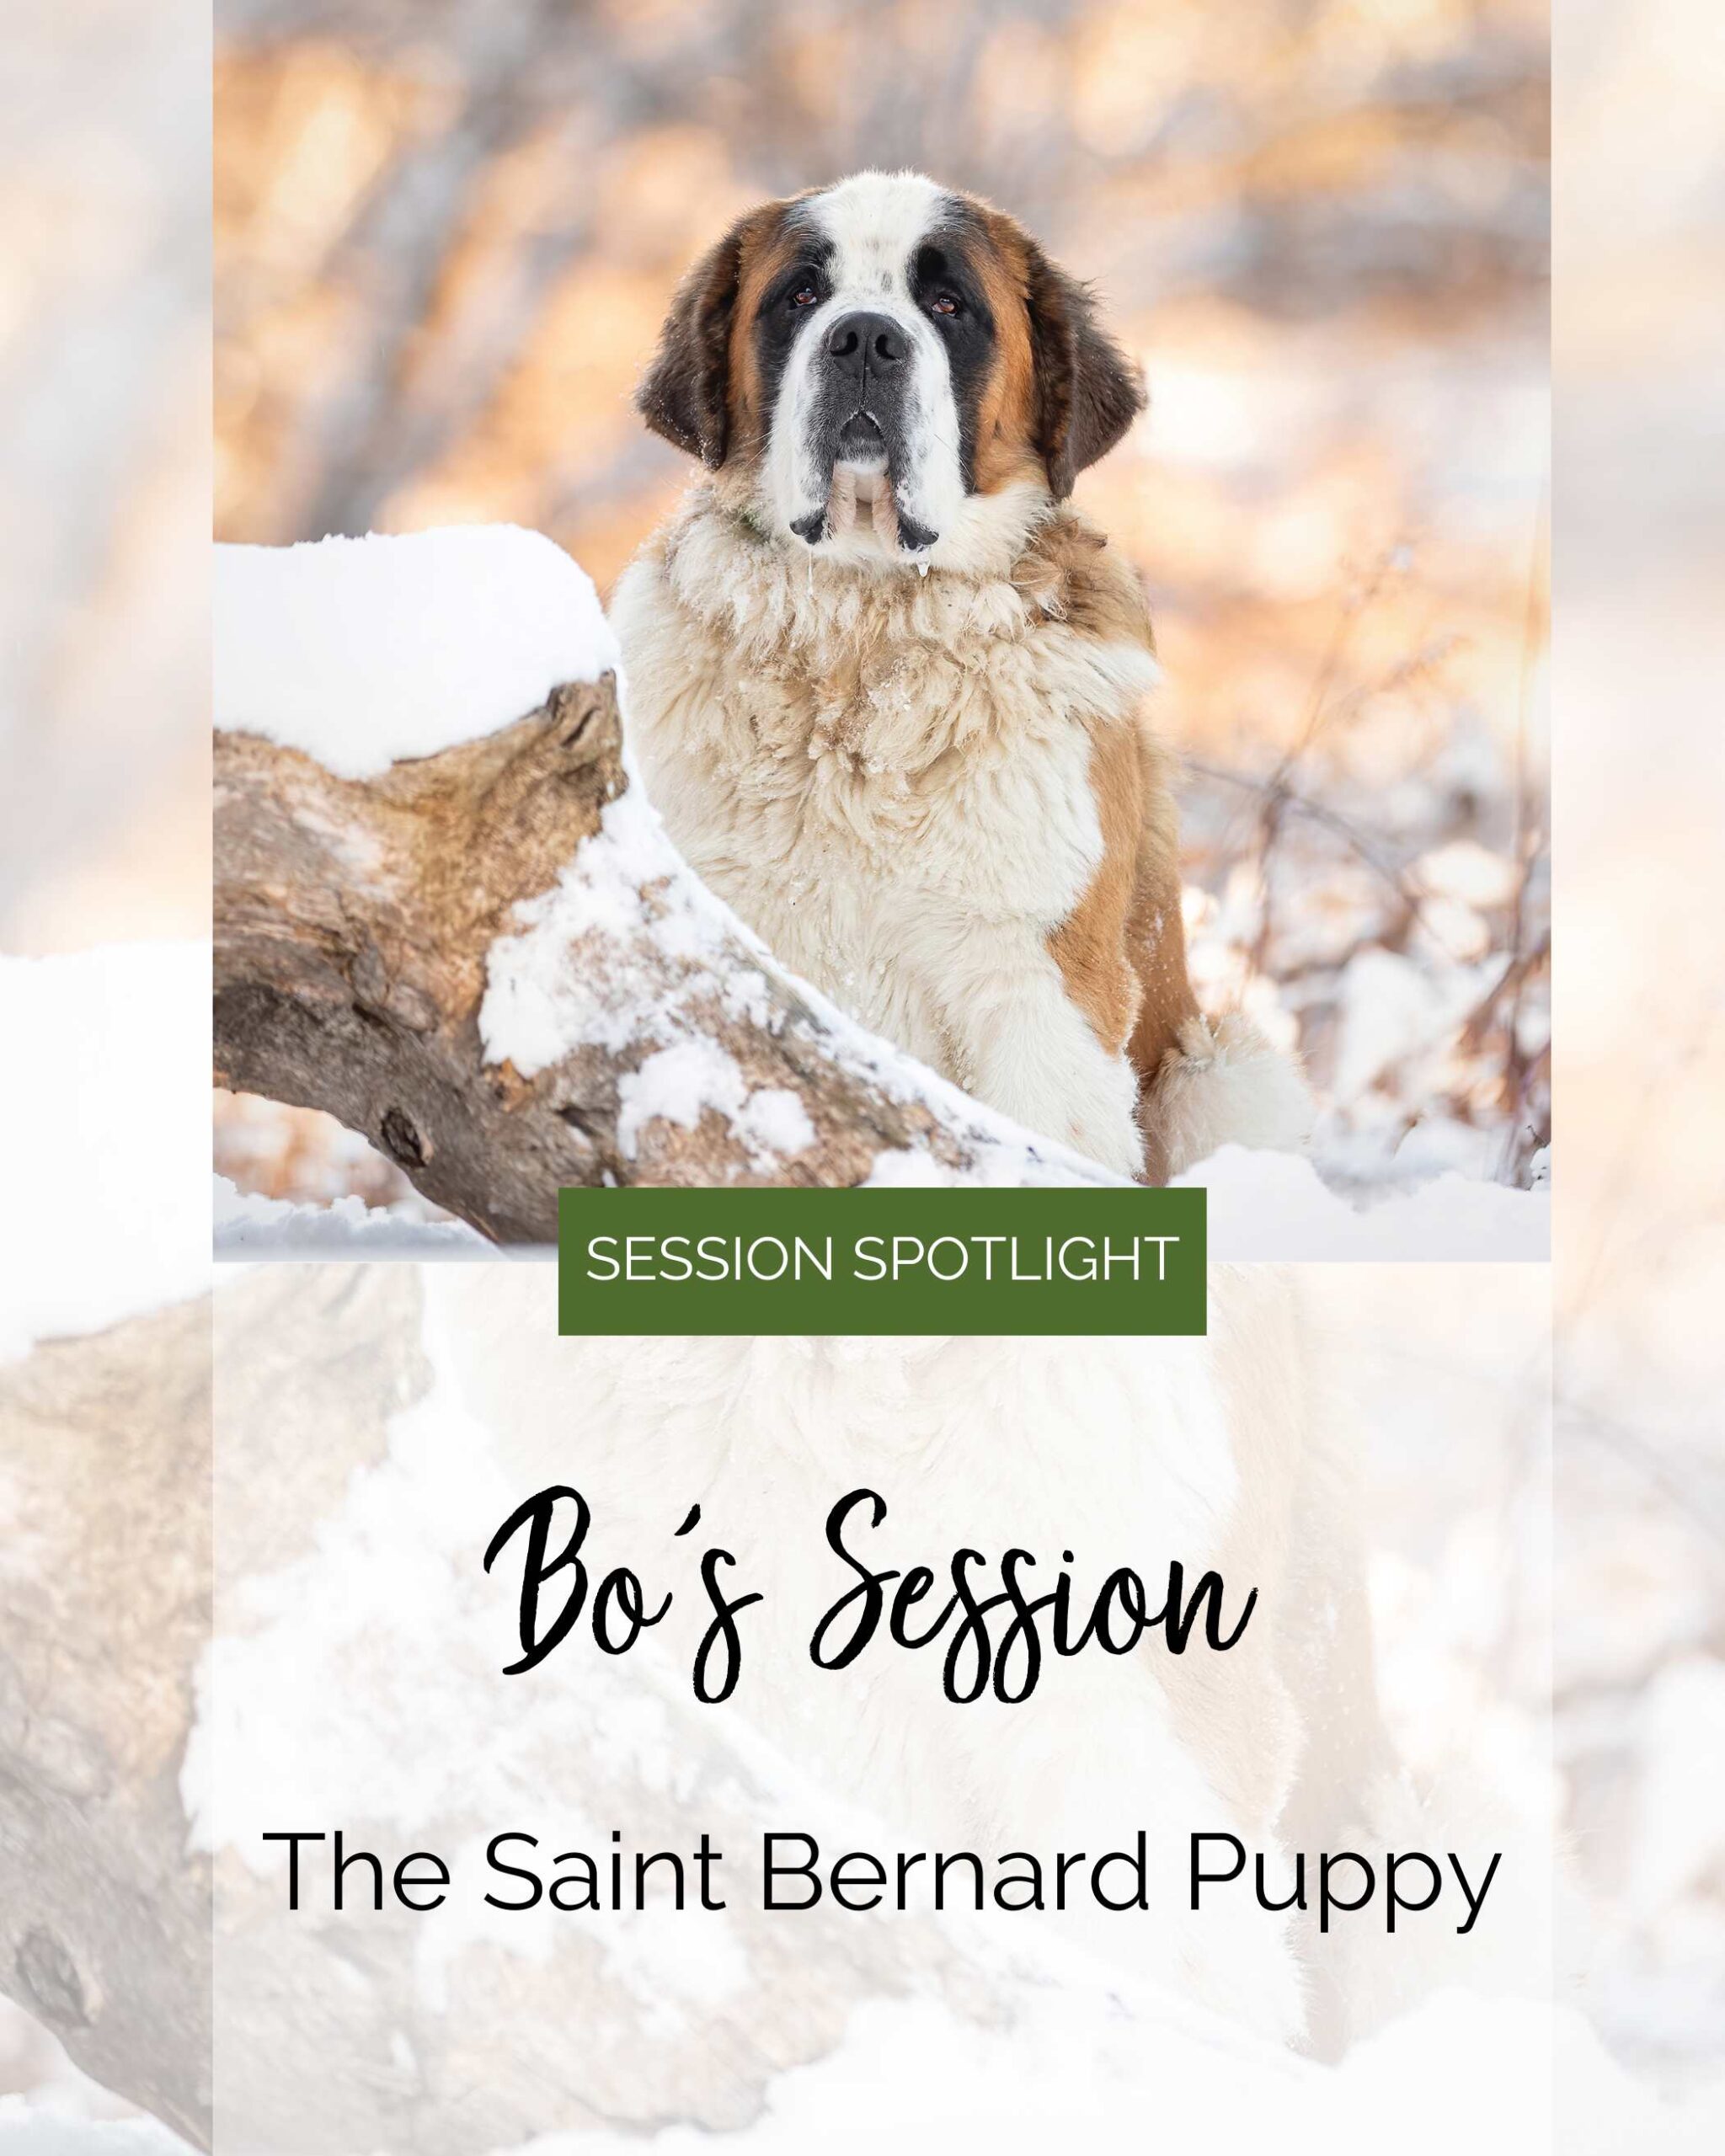 Saint Bernard Puppy in the snow